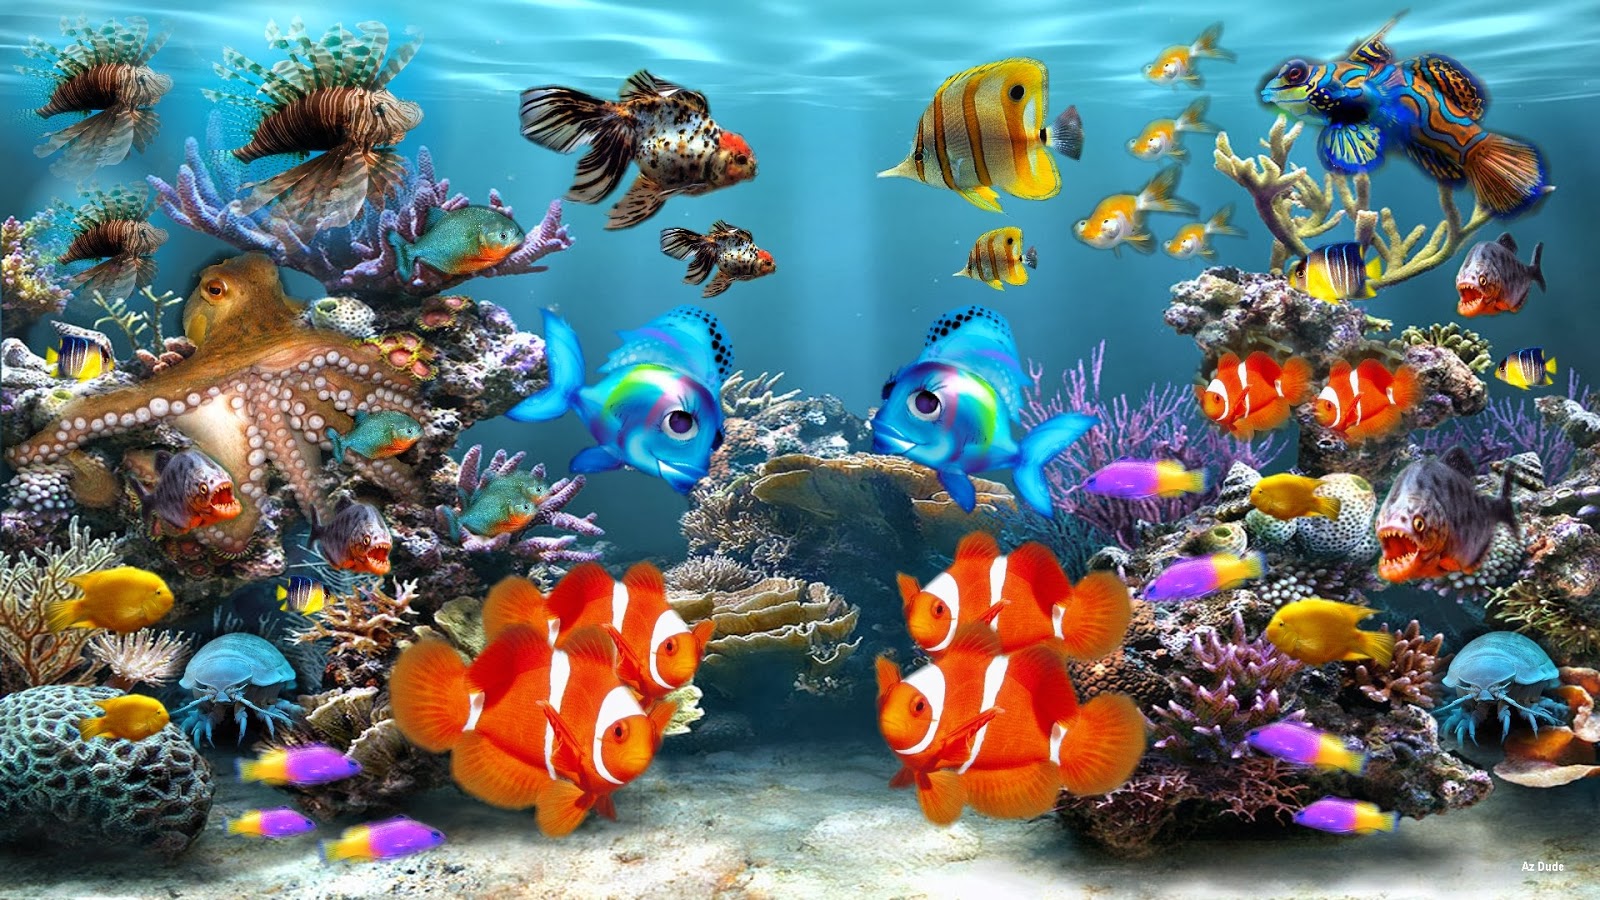 aquarium tapete hd,meeresbiologie,korallenrifffische,korallenriff,fisch,unter wasser